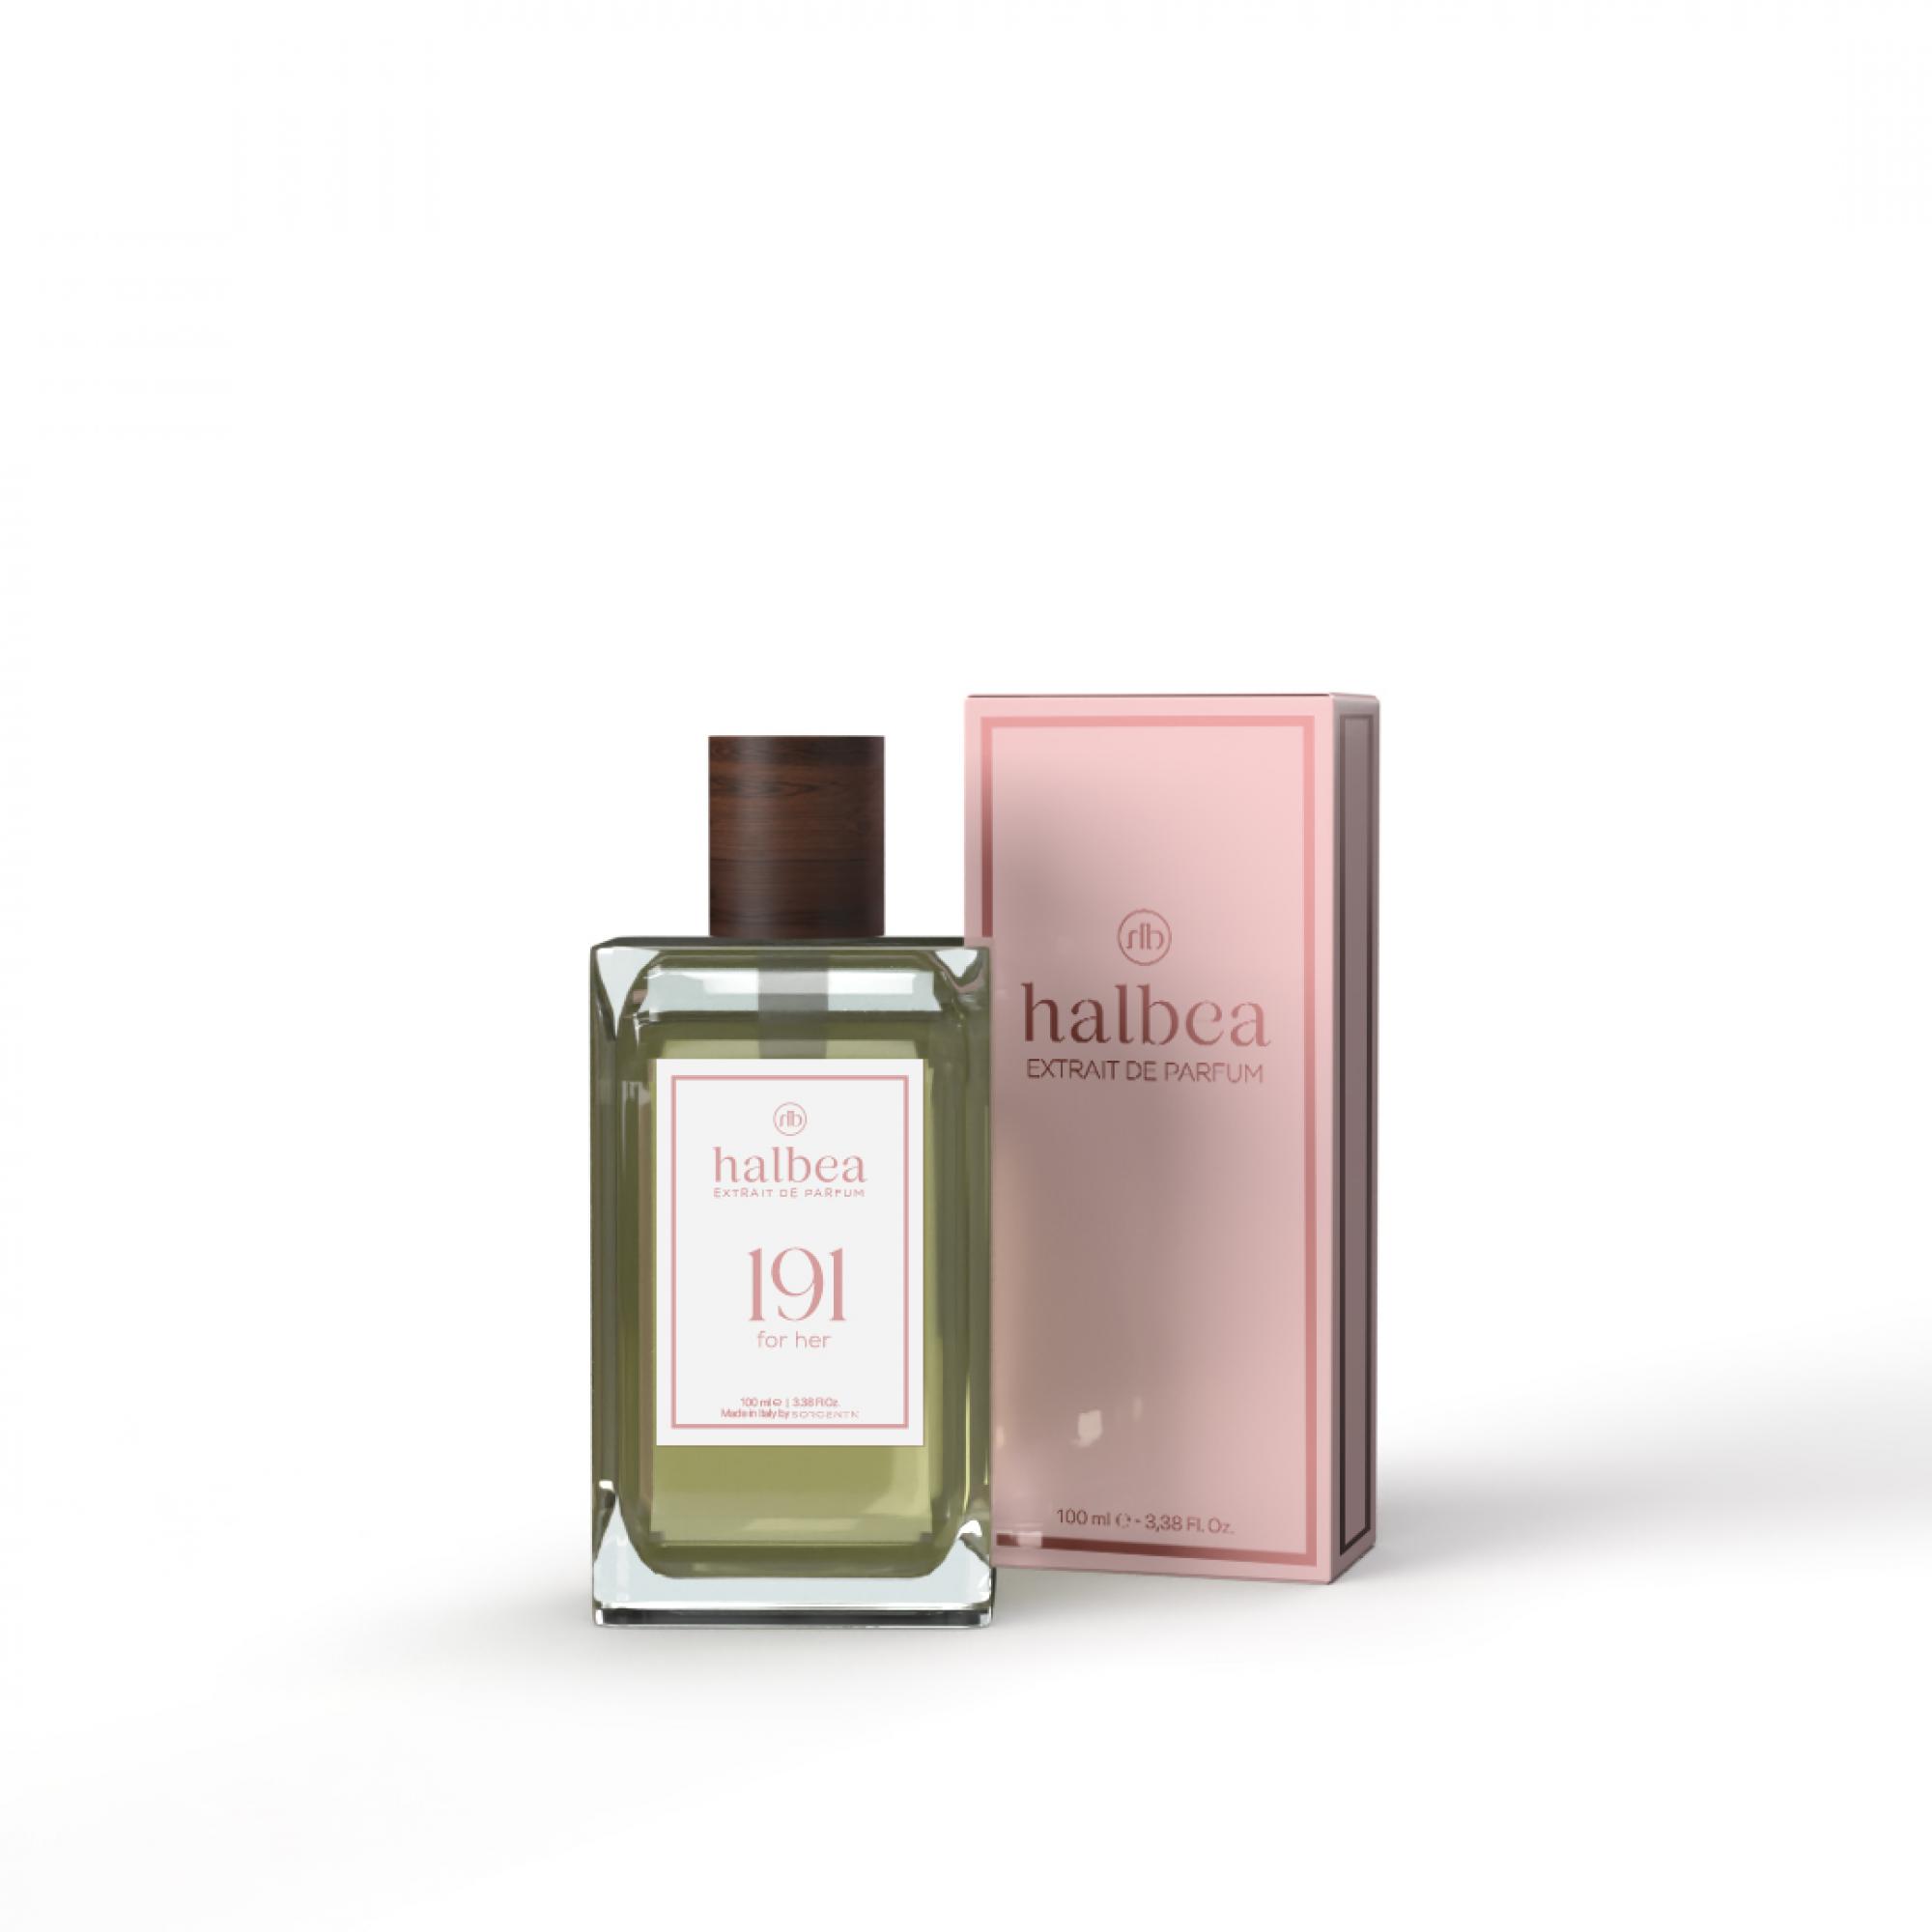 Halbea Parfum Nr. 191 insp. by Jean Paul Gaultier Scandal 100ml